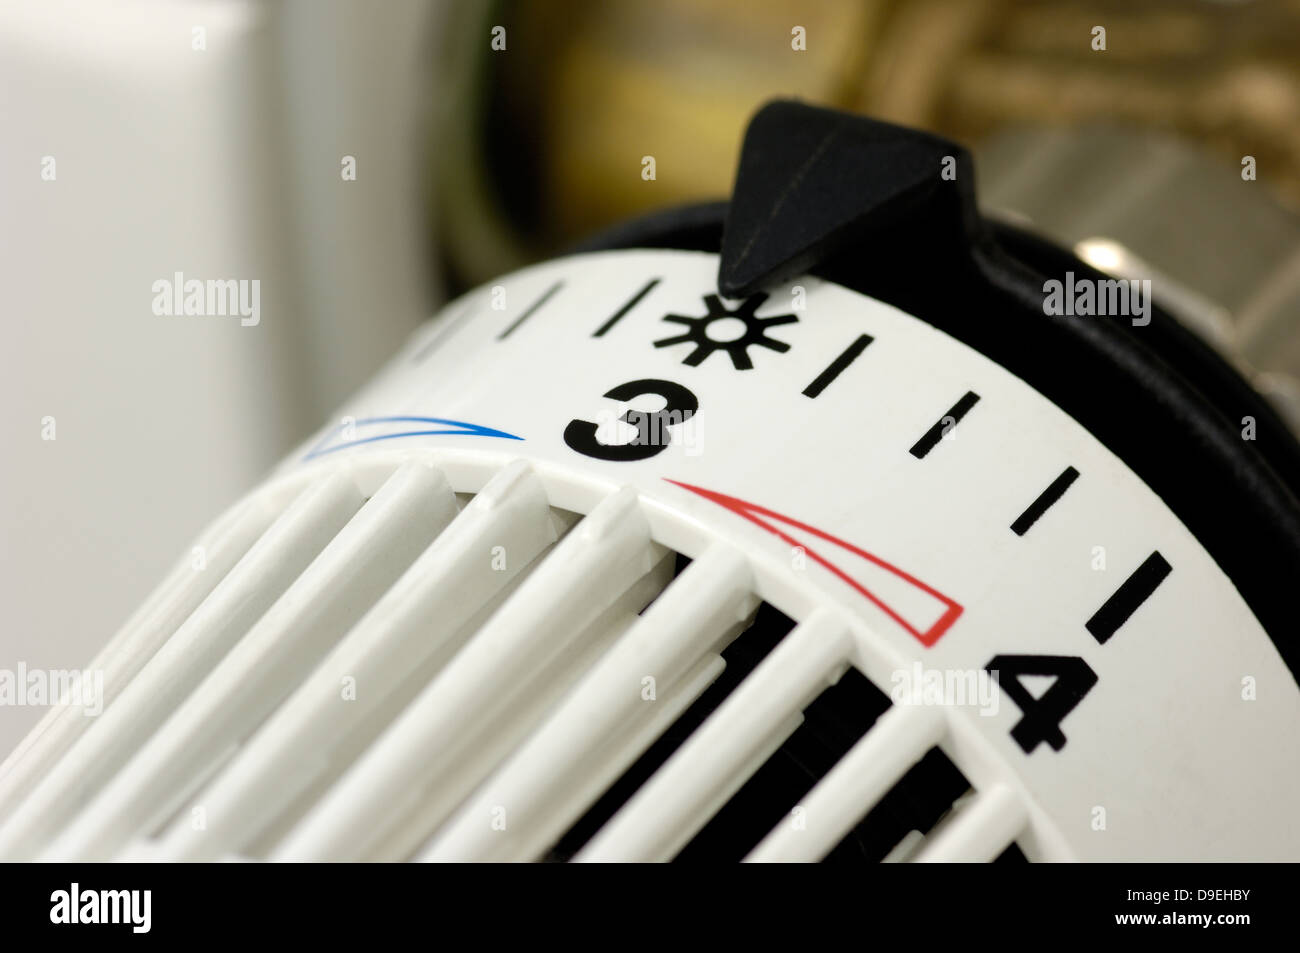 Heizung Thermostat auf Stufe 3 Stockfotografie - Alamy